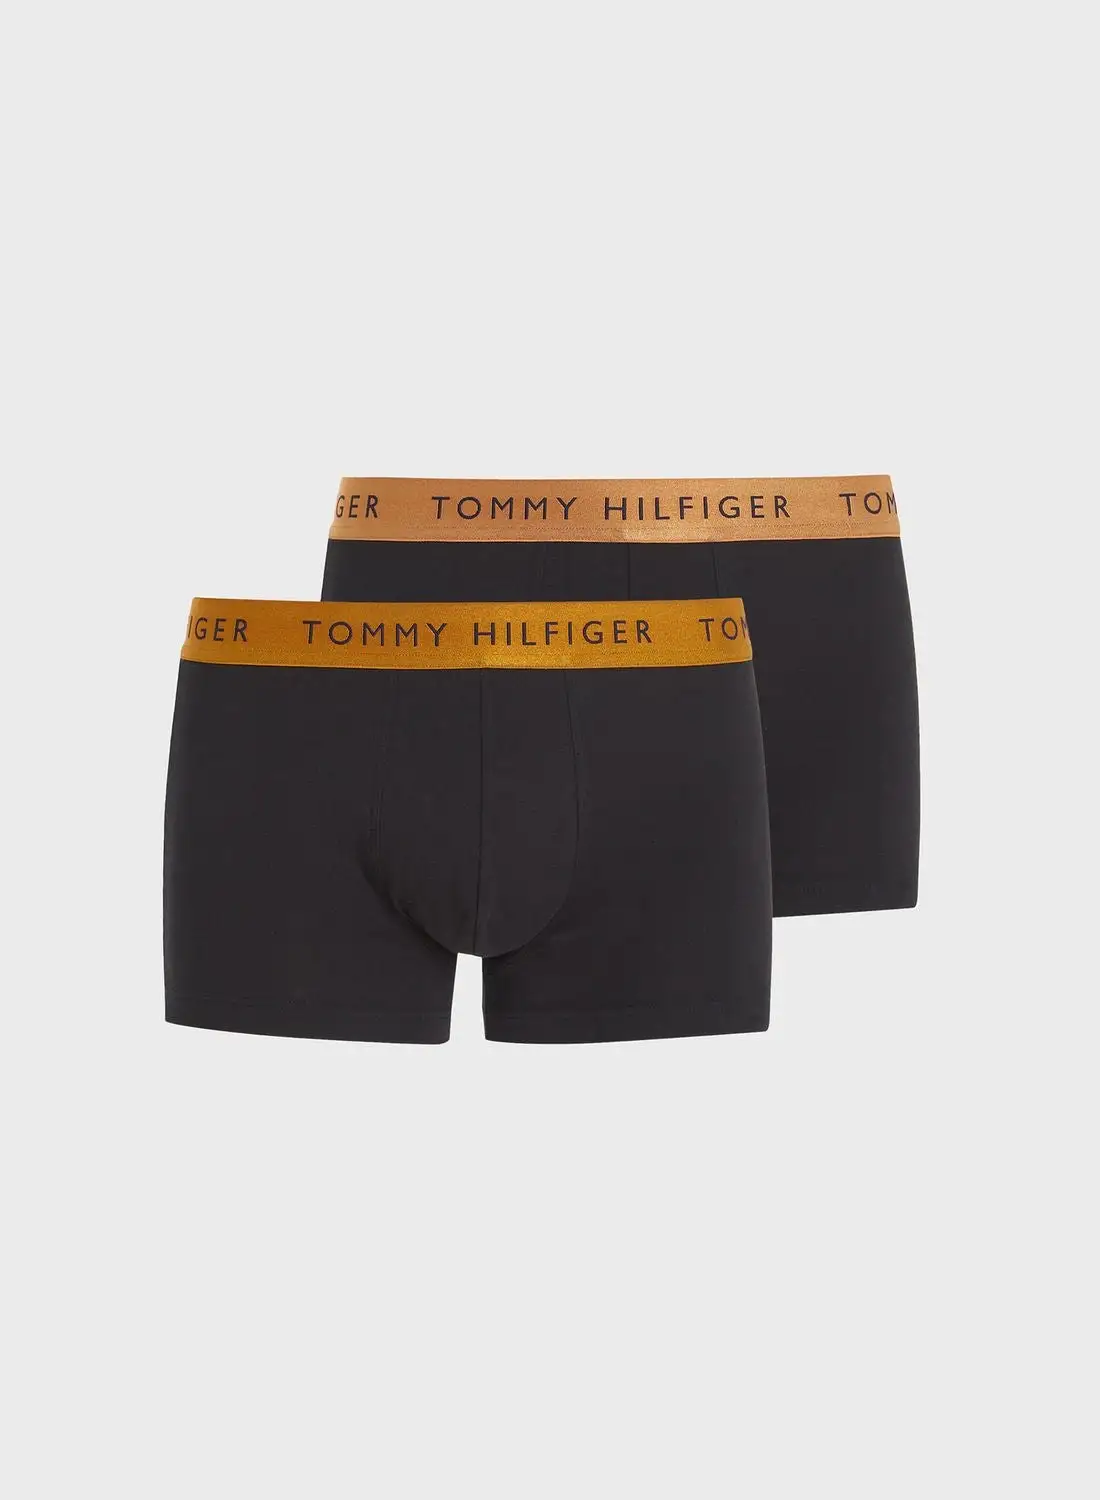 TOMMY HILFIGER Essential Trunks & T-Shirt Set